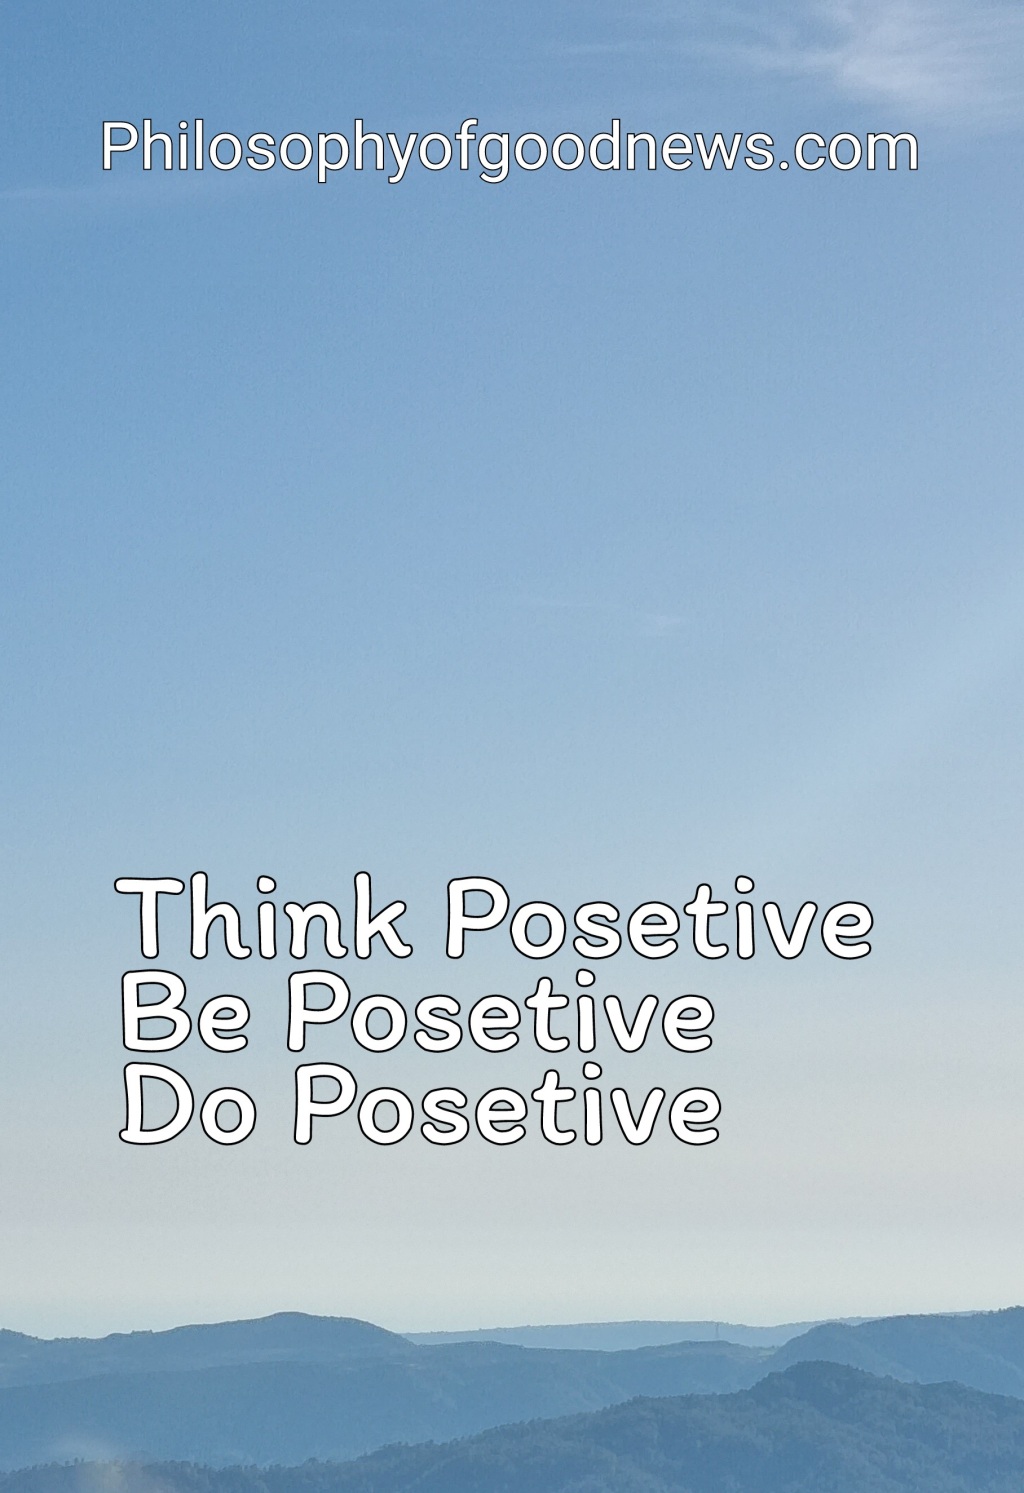 Be Positive, Do Positive